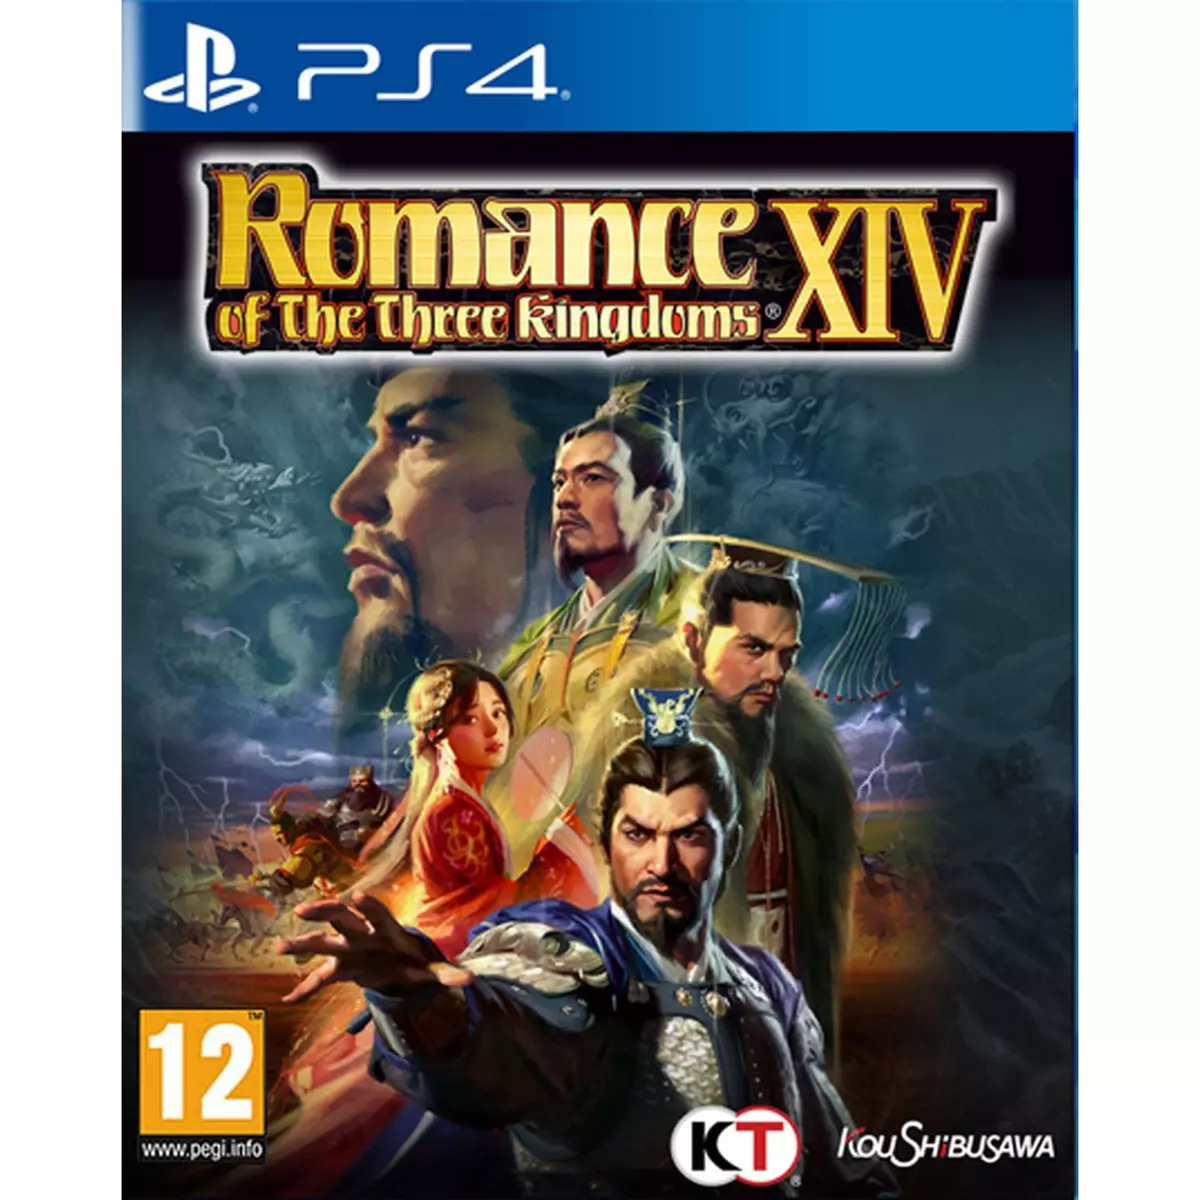 Romance of the Three Kingdoms XIV PS4